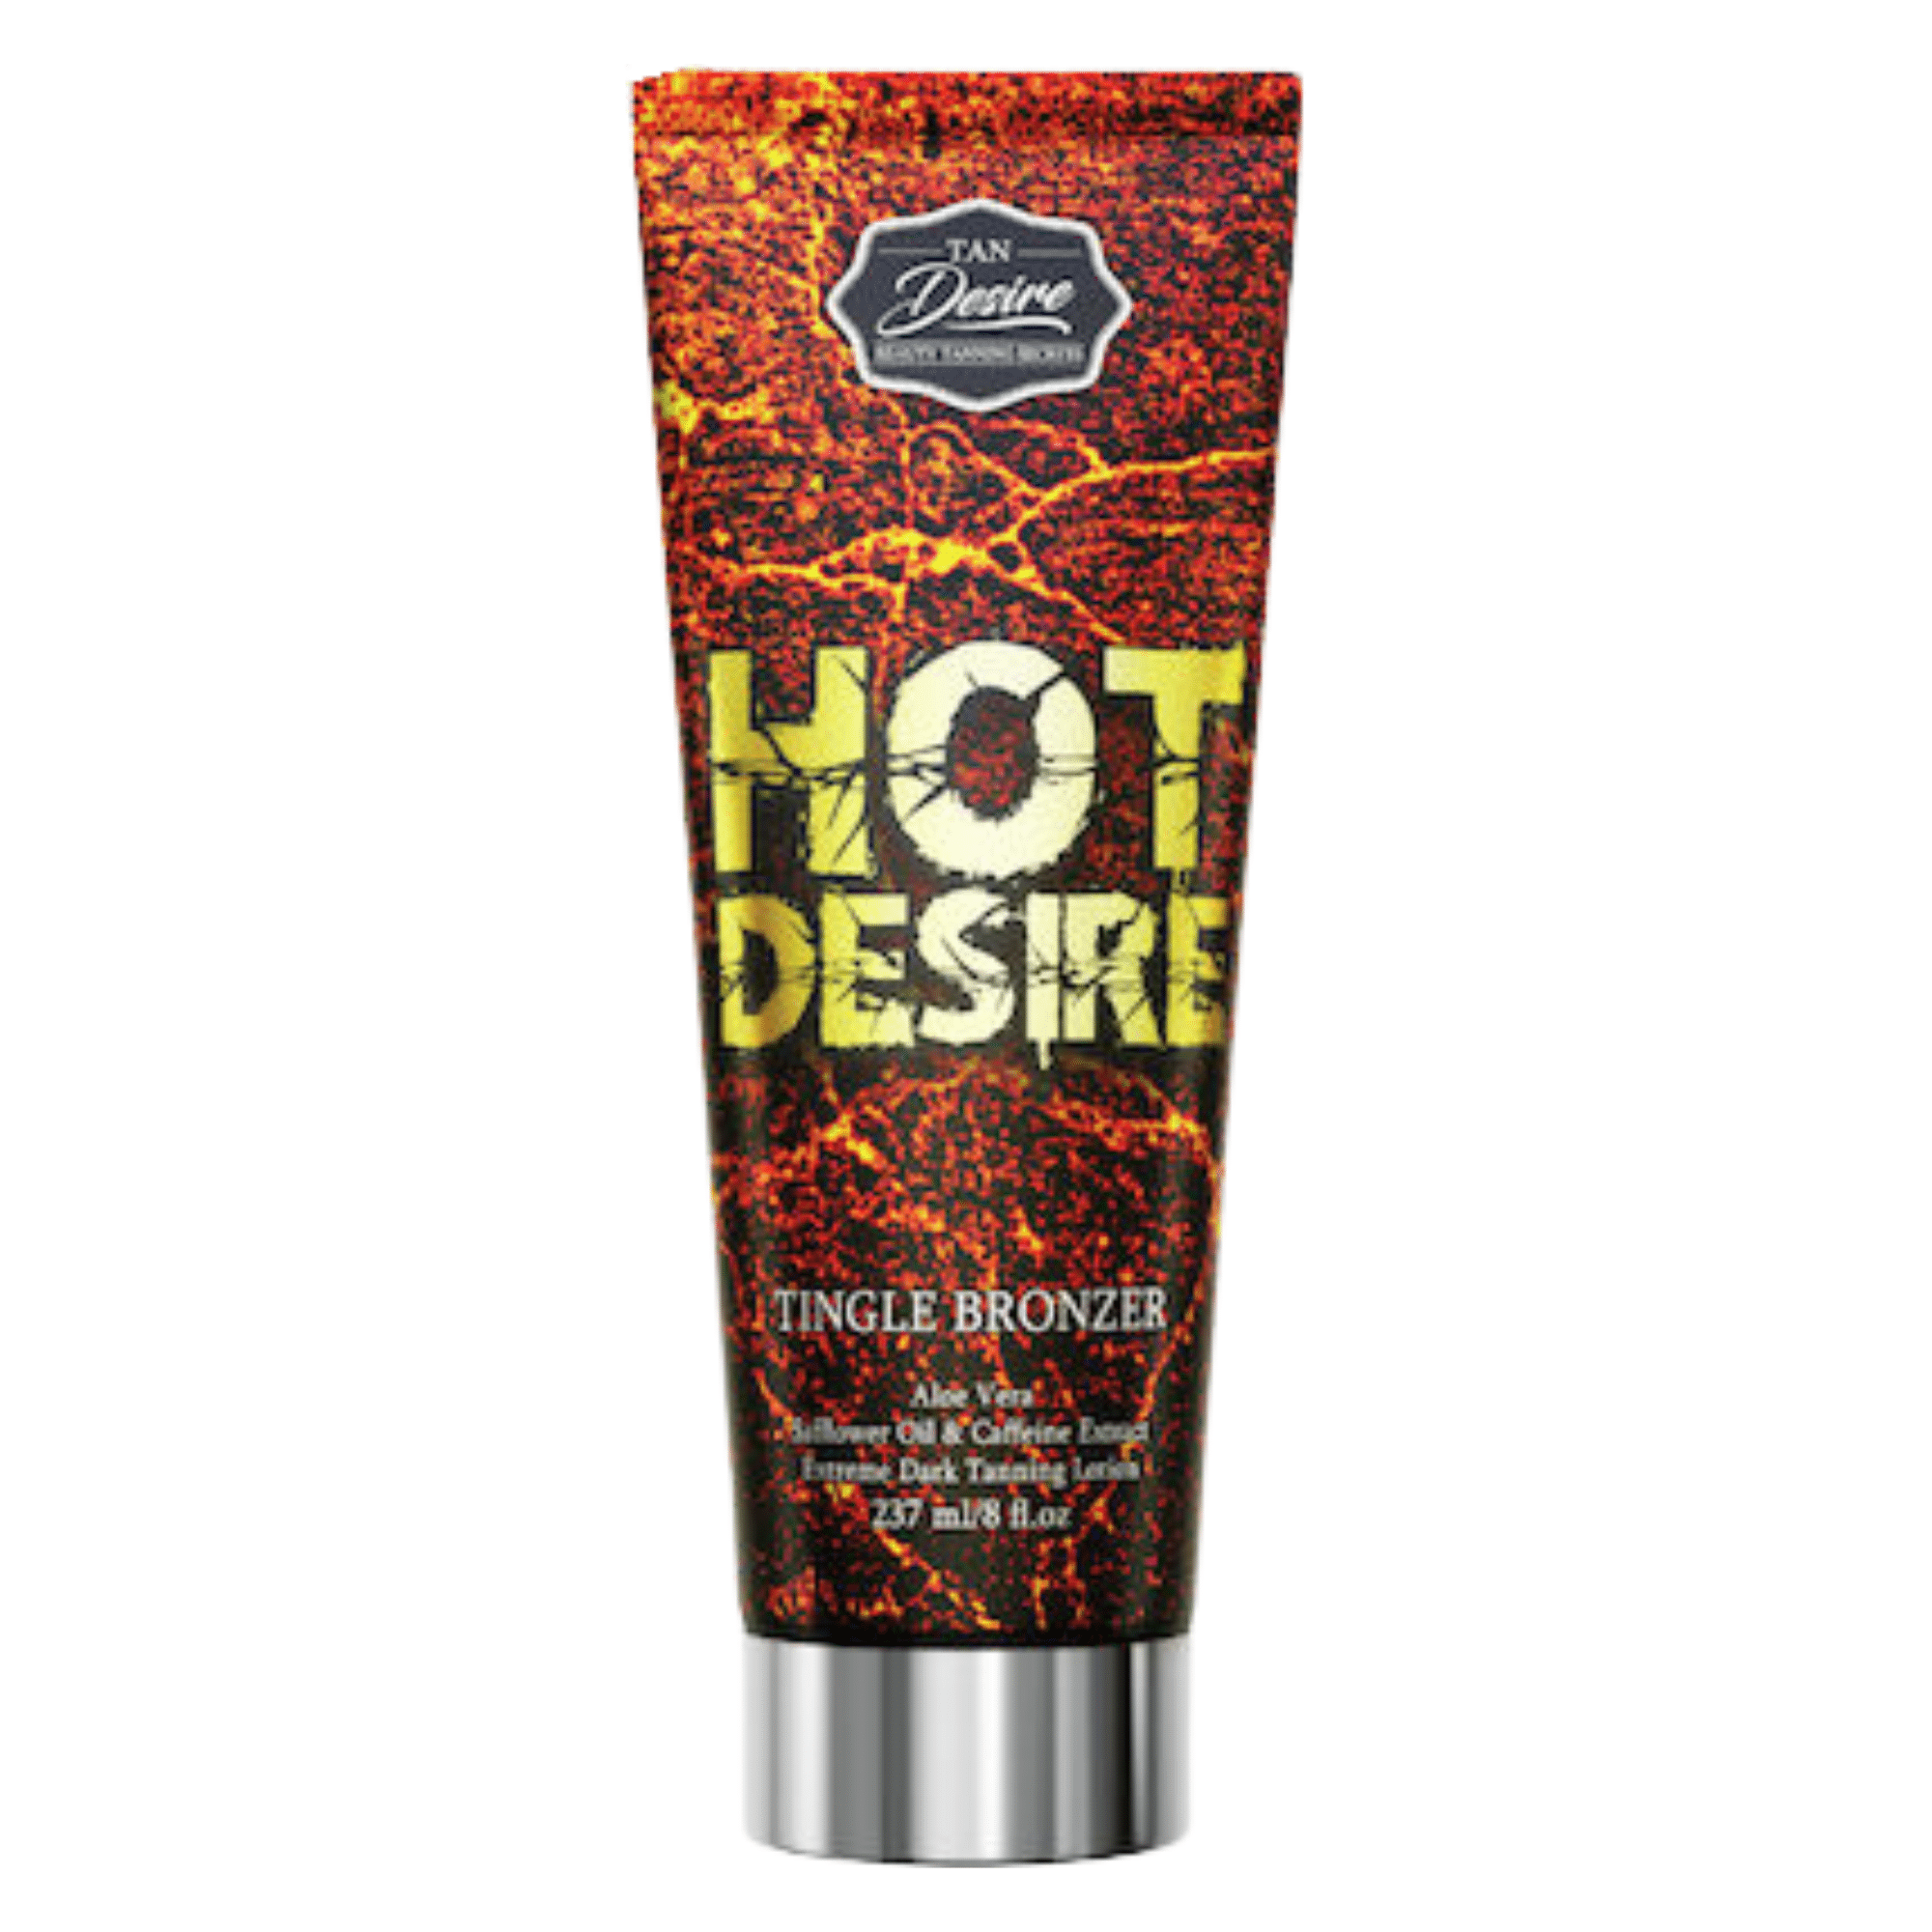 TanDesire Hot Desire (237ml)